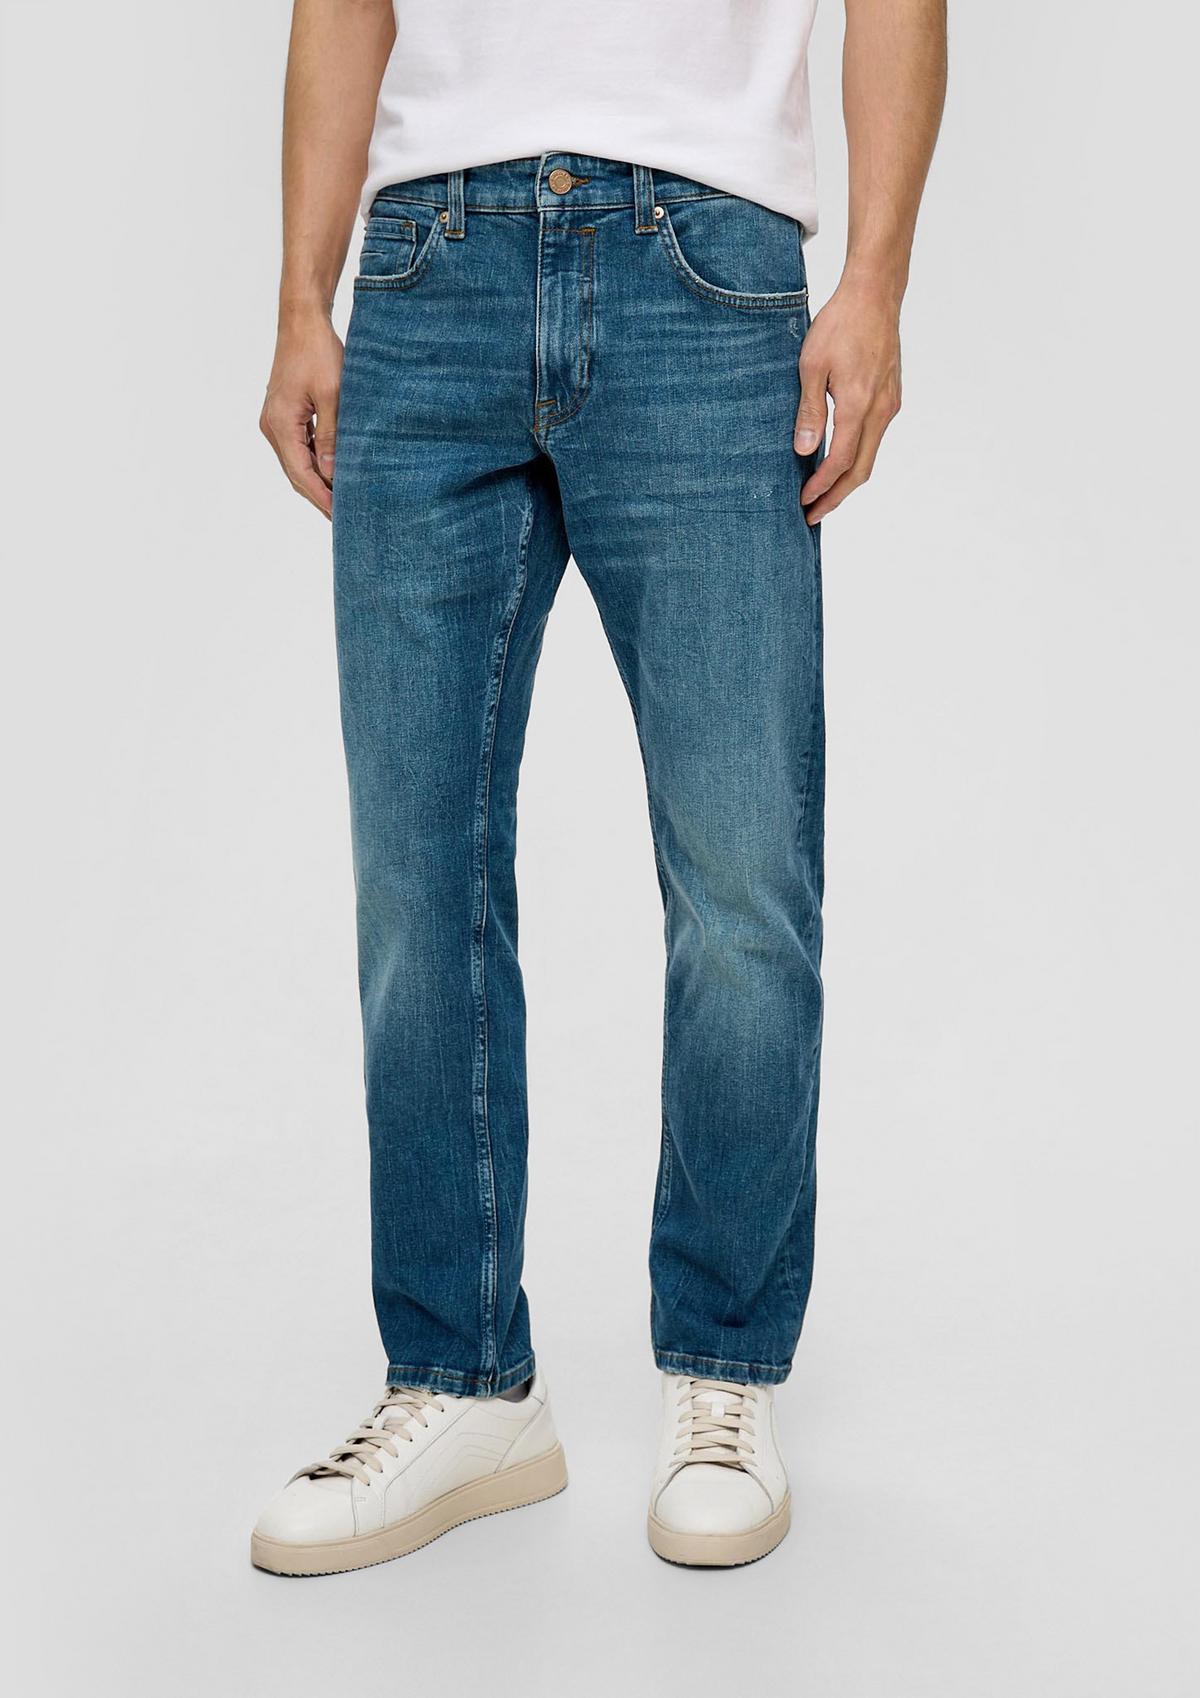 York jeans / regular fit / mid rise / straight leg